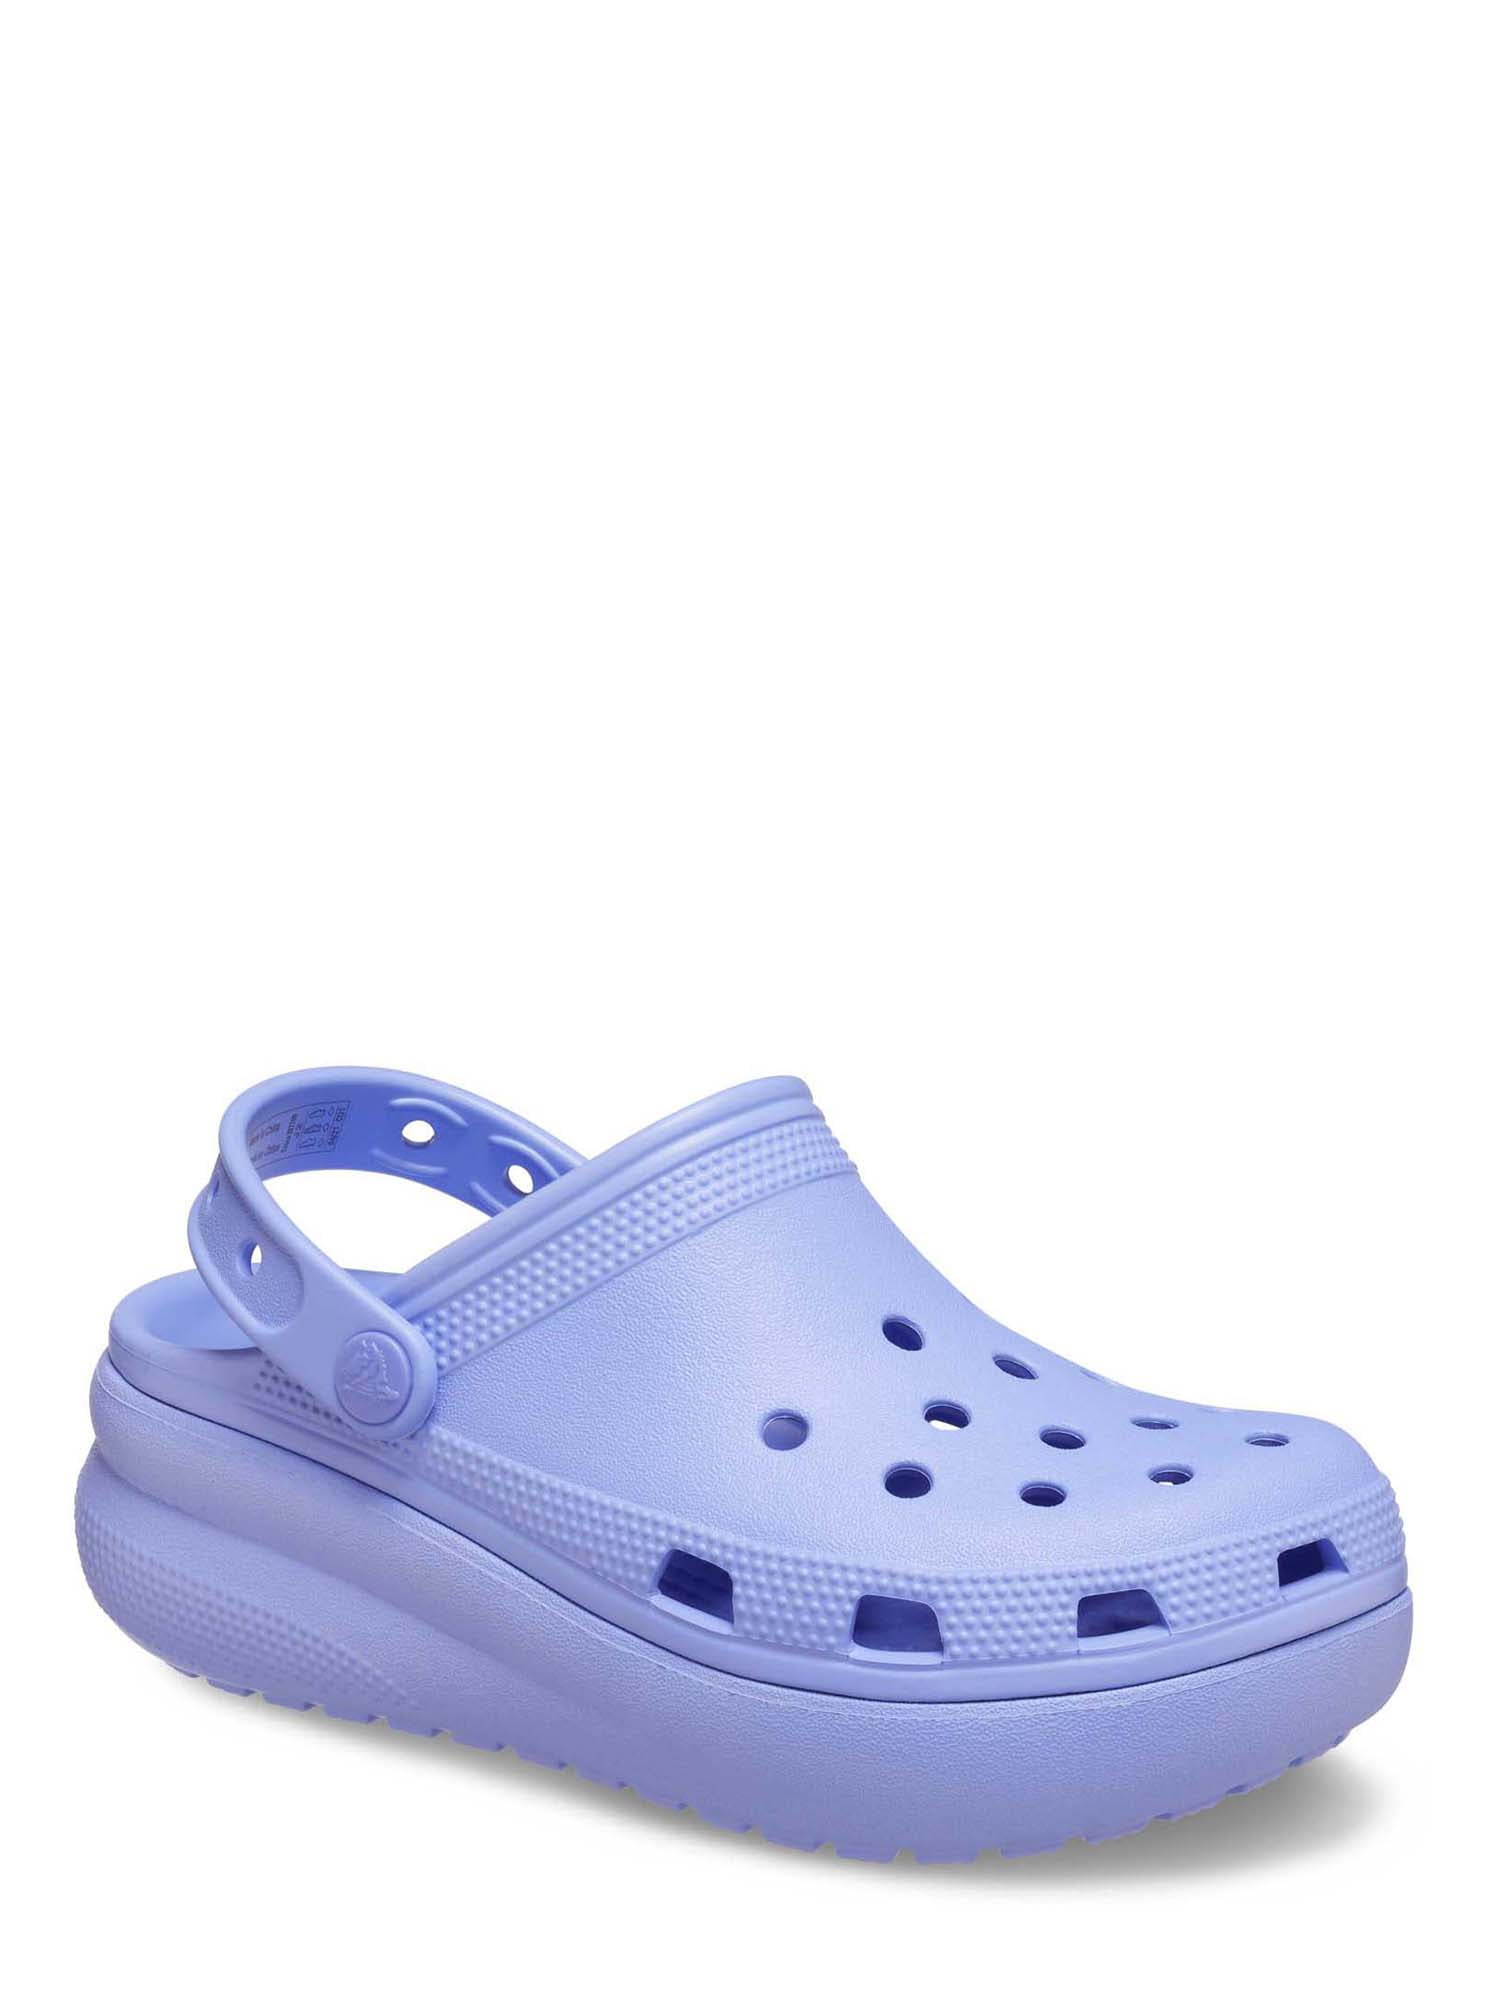 Crocs Little & Big Kids Cutie Crush Clog Sandal, Sizes 11-6 